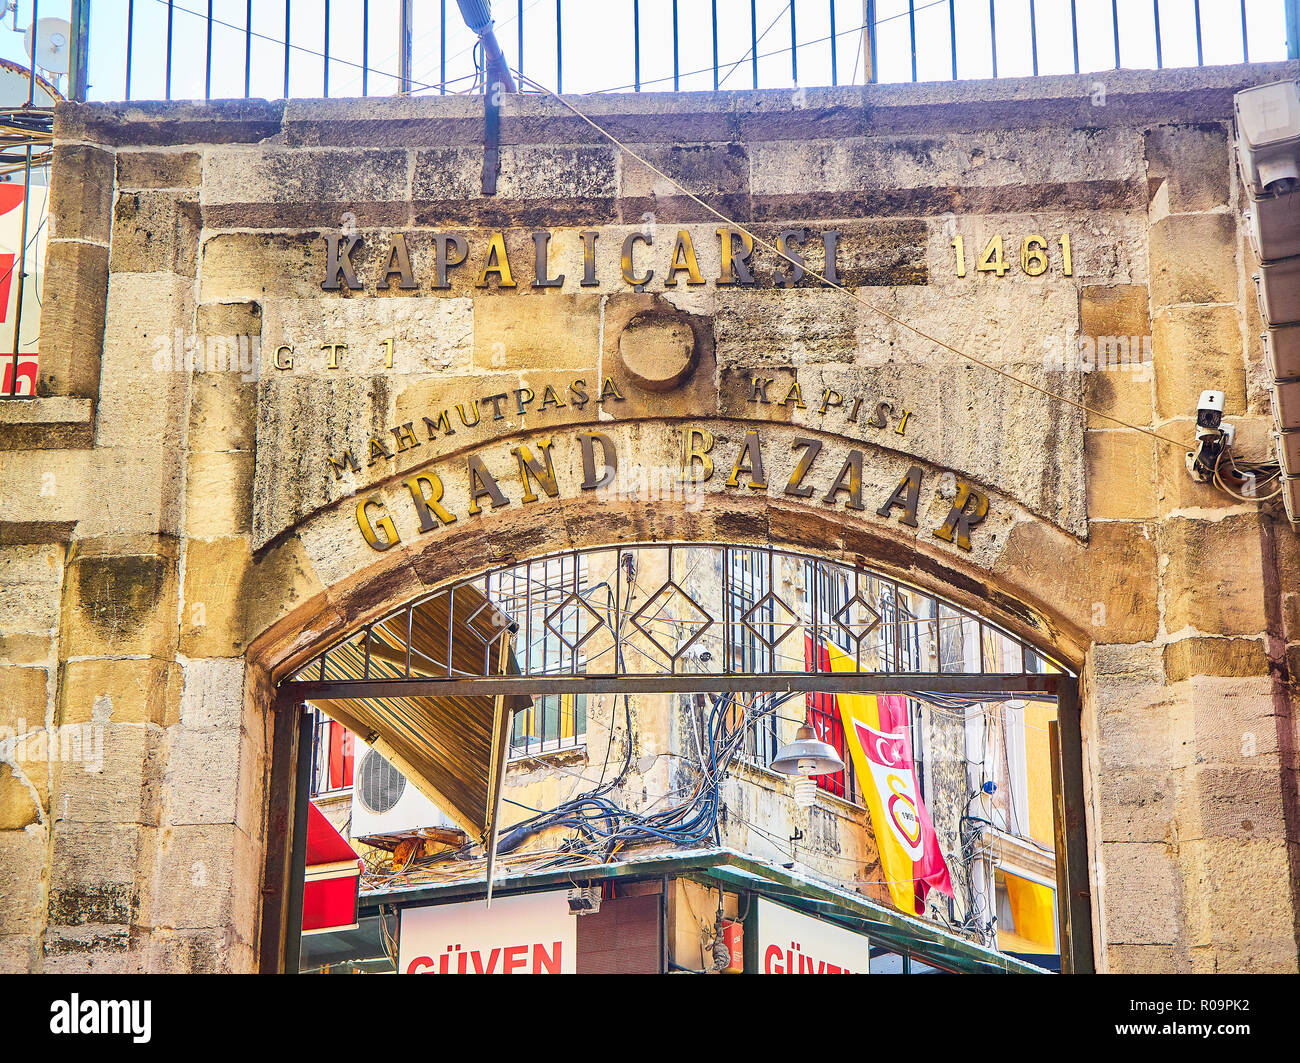 The Mahmutpasa Kapisi gate of the Kapali Carsi, The Grand Bazaar of Istanbul, Turkey. Stock Photo